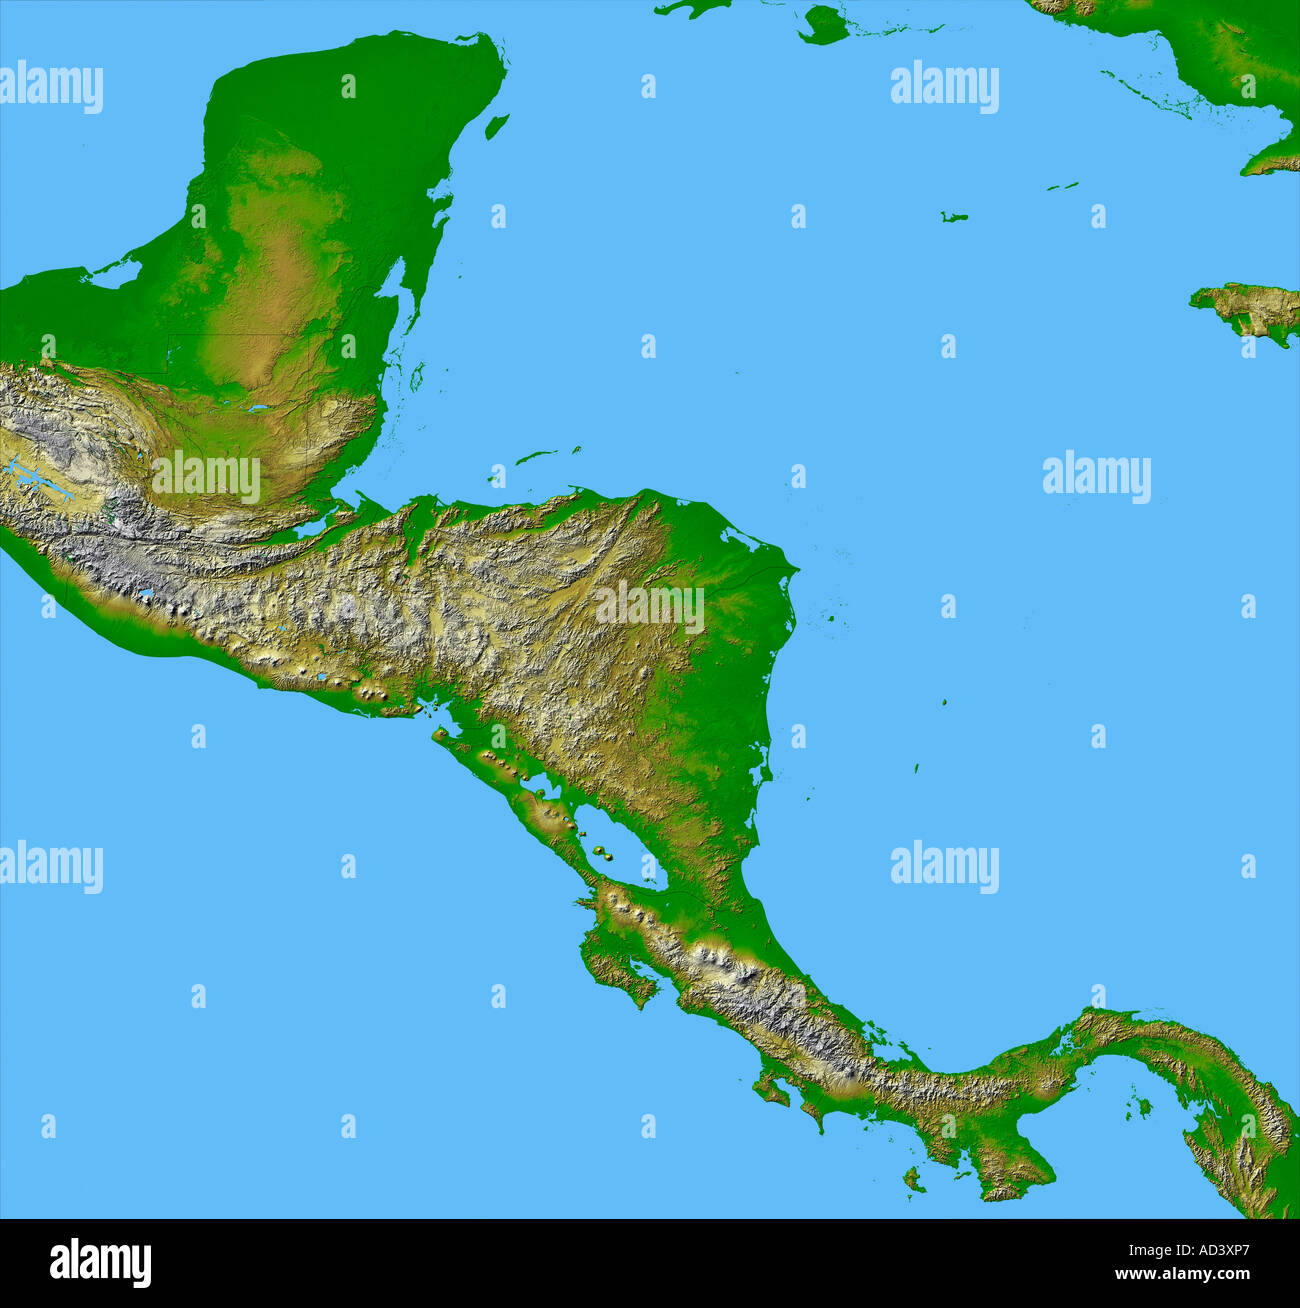 Topography of Panama, Costa Rica, Nicaragua, El Salvador, Honduras, Guatemala, Belize, southern Mexico, Cuba and Jamaica Stock Photo